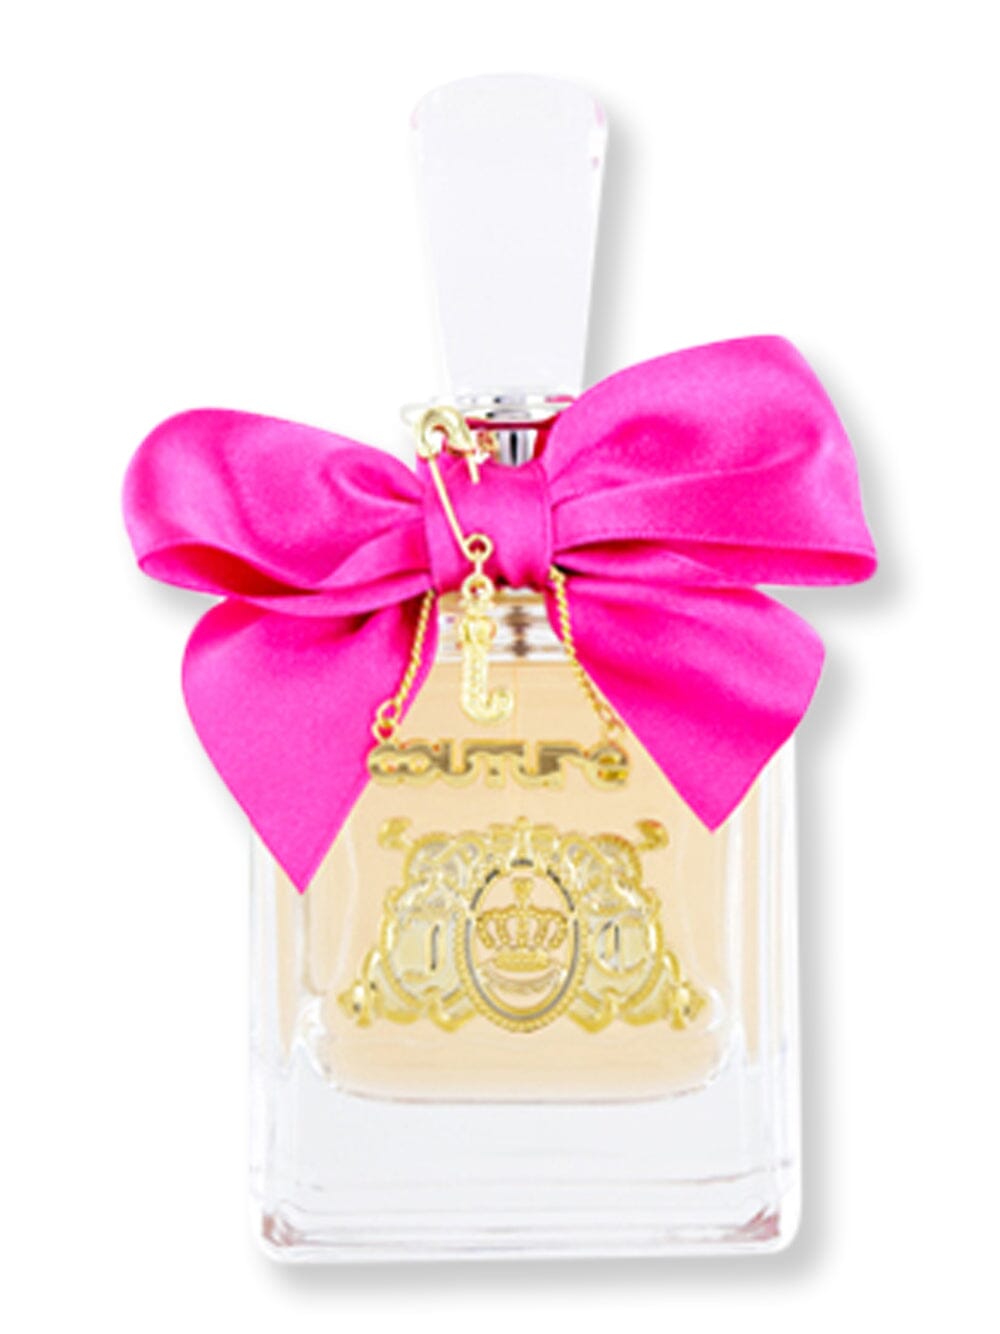 Juicy Couture Juicy Couture Viva La Juicy EDP Spray Tester 3.4 oz100 ml Perfume 